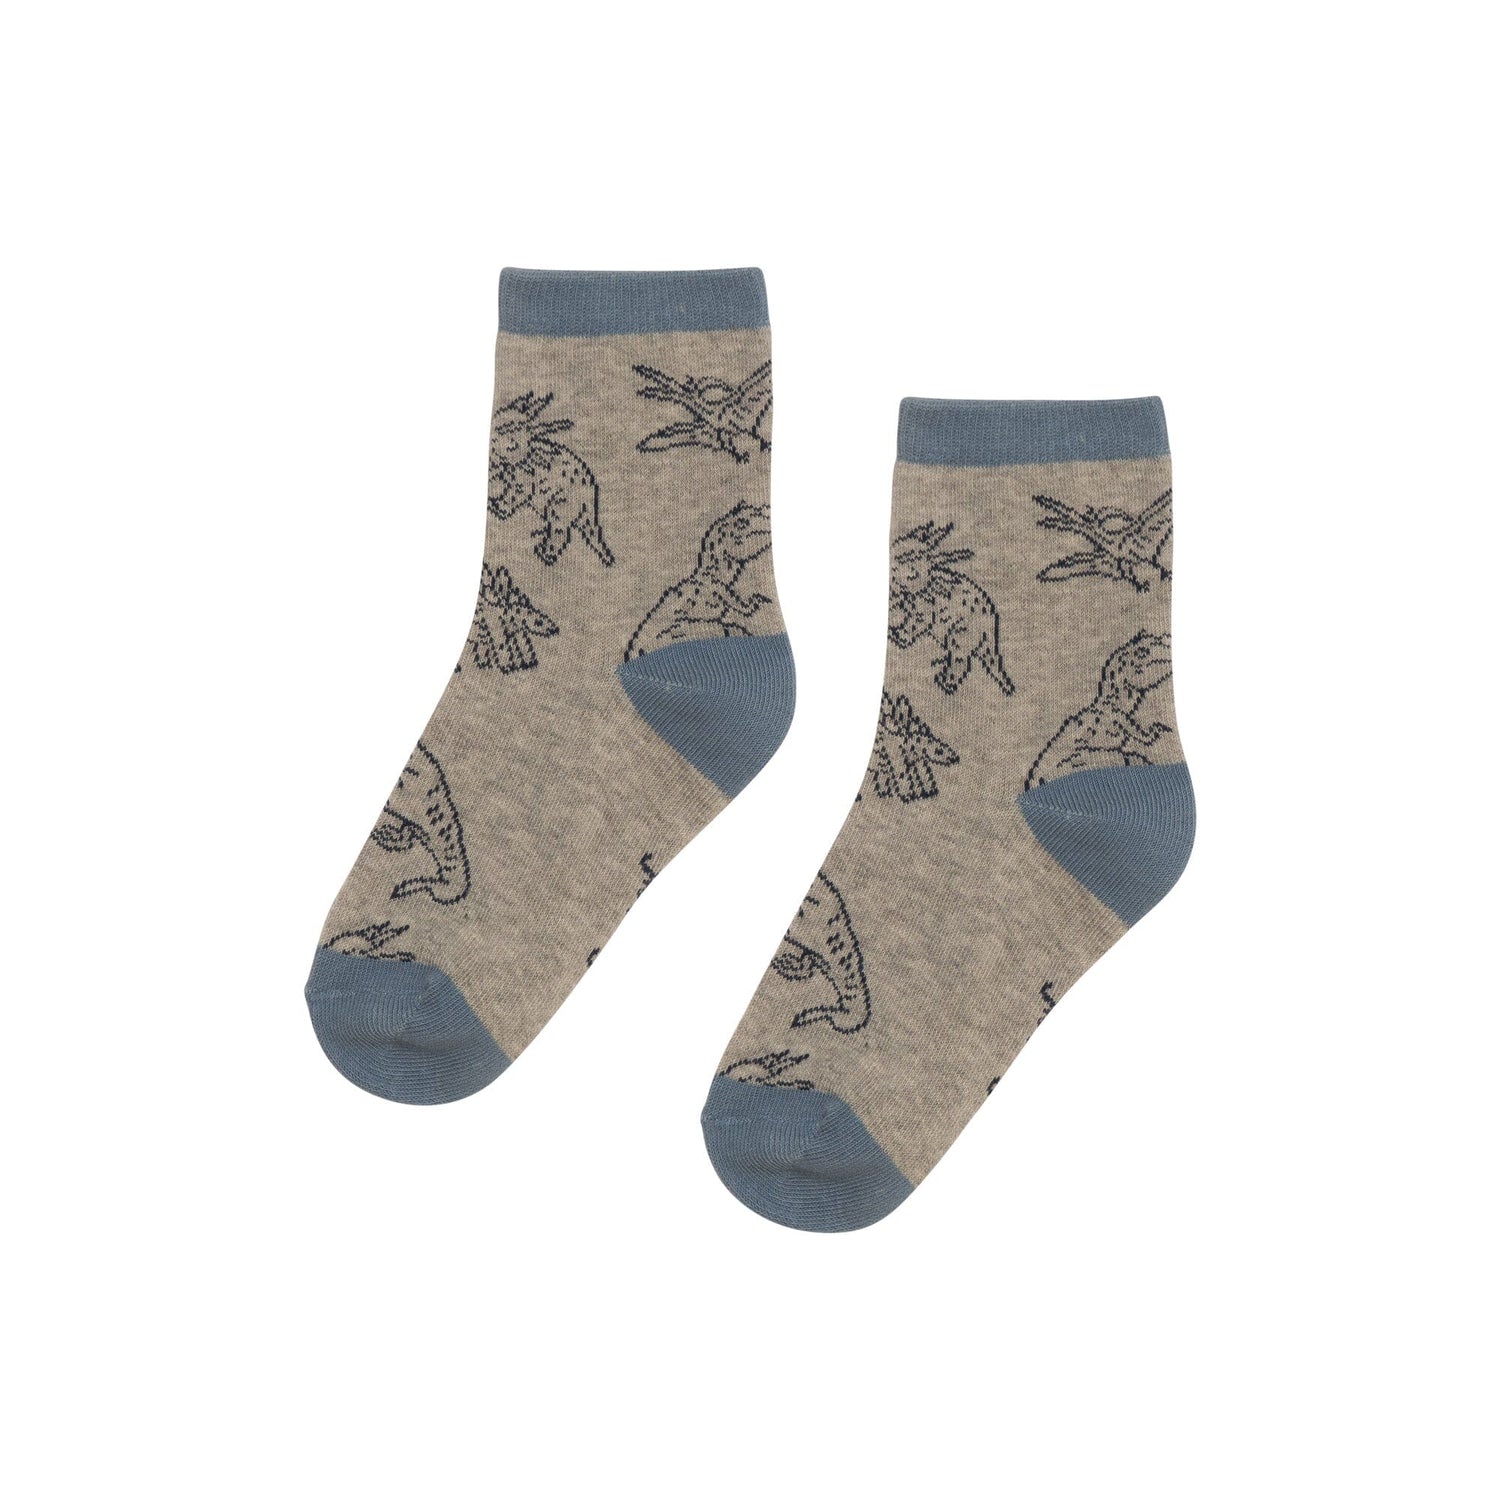 Printed Socks Light Heather Grey Dinosaurs - E30YBS_191